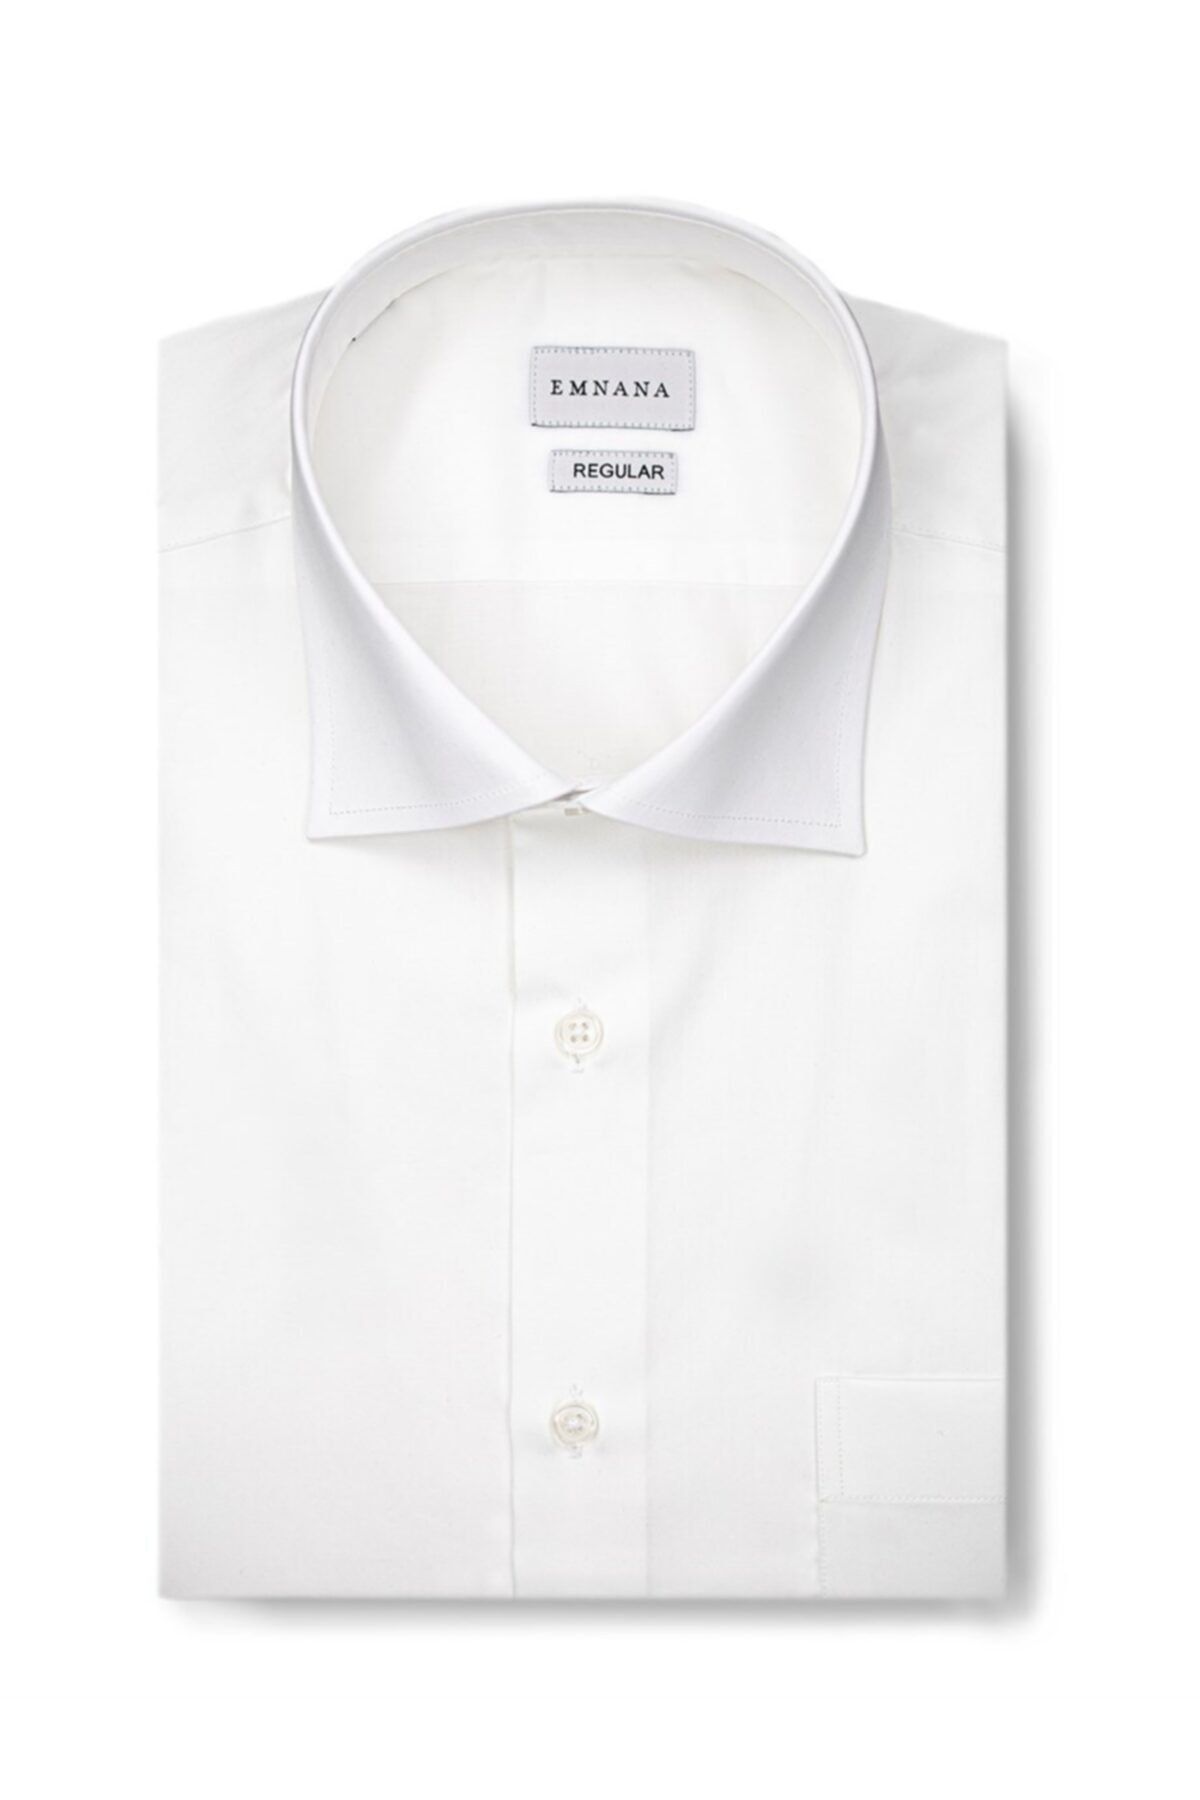 EMNANA Beyaz Kısa Kollu Regular Fit Gömlek